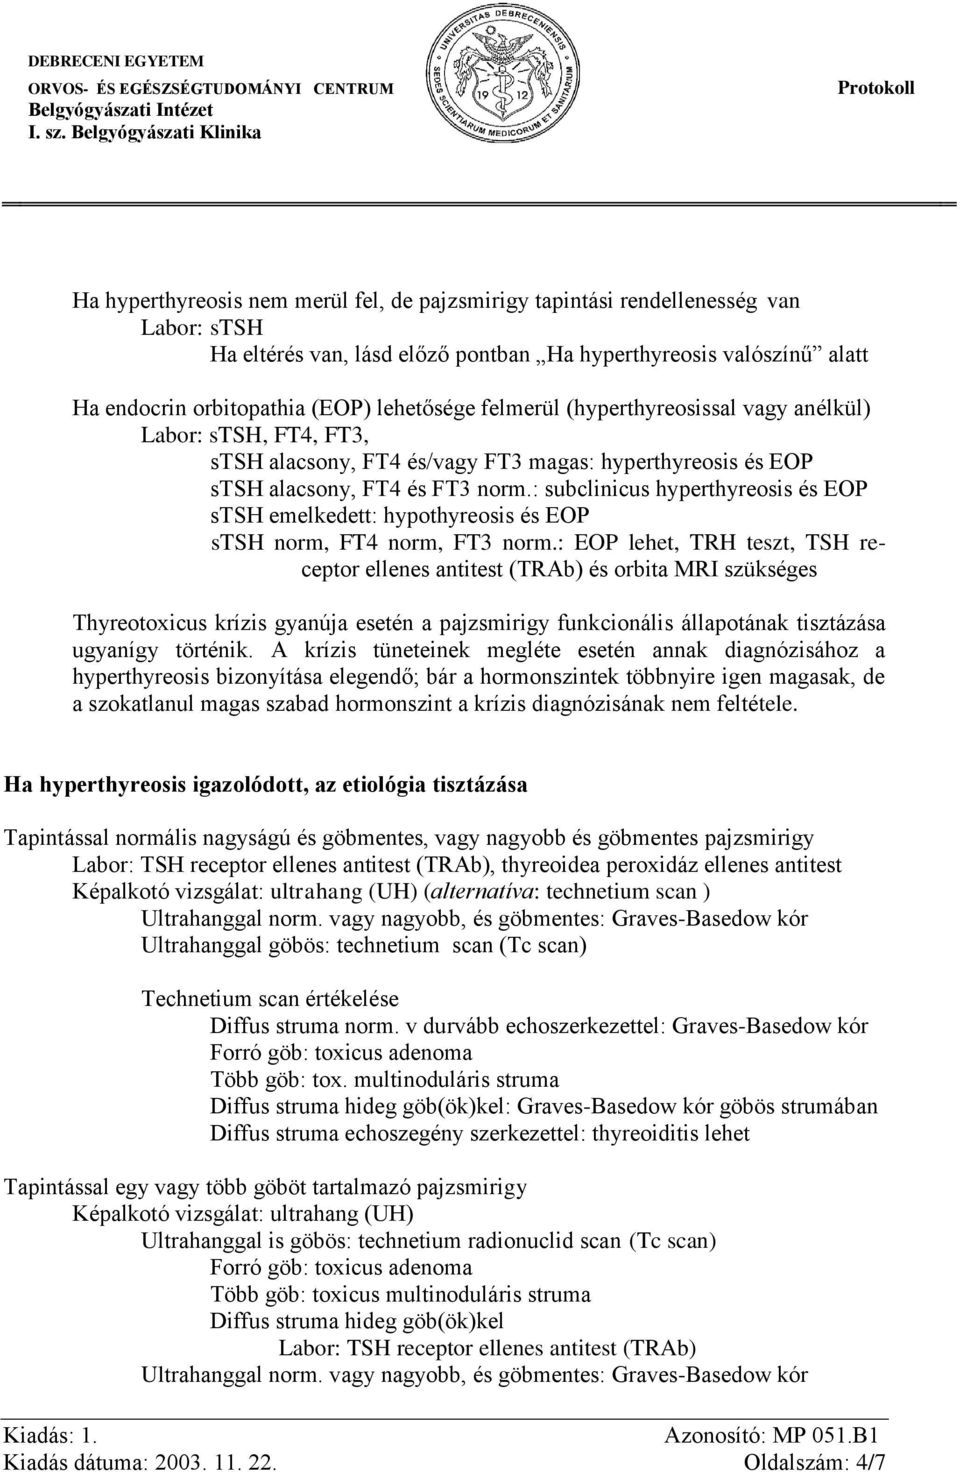 : subclinicus hyperthyreosis és EOP stsh emelkedett: hypothyreosis és EOP stsh norm, FT4 norm, FT3 norm.